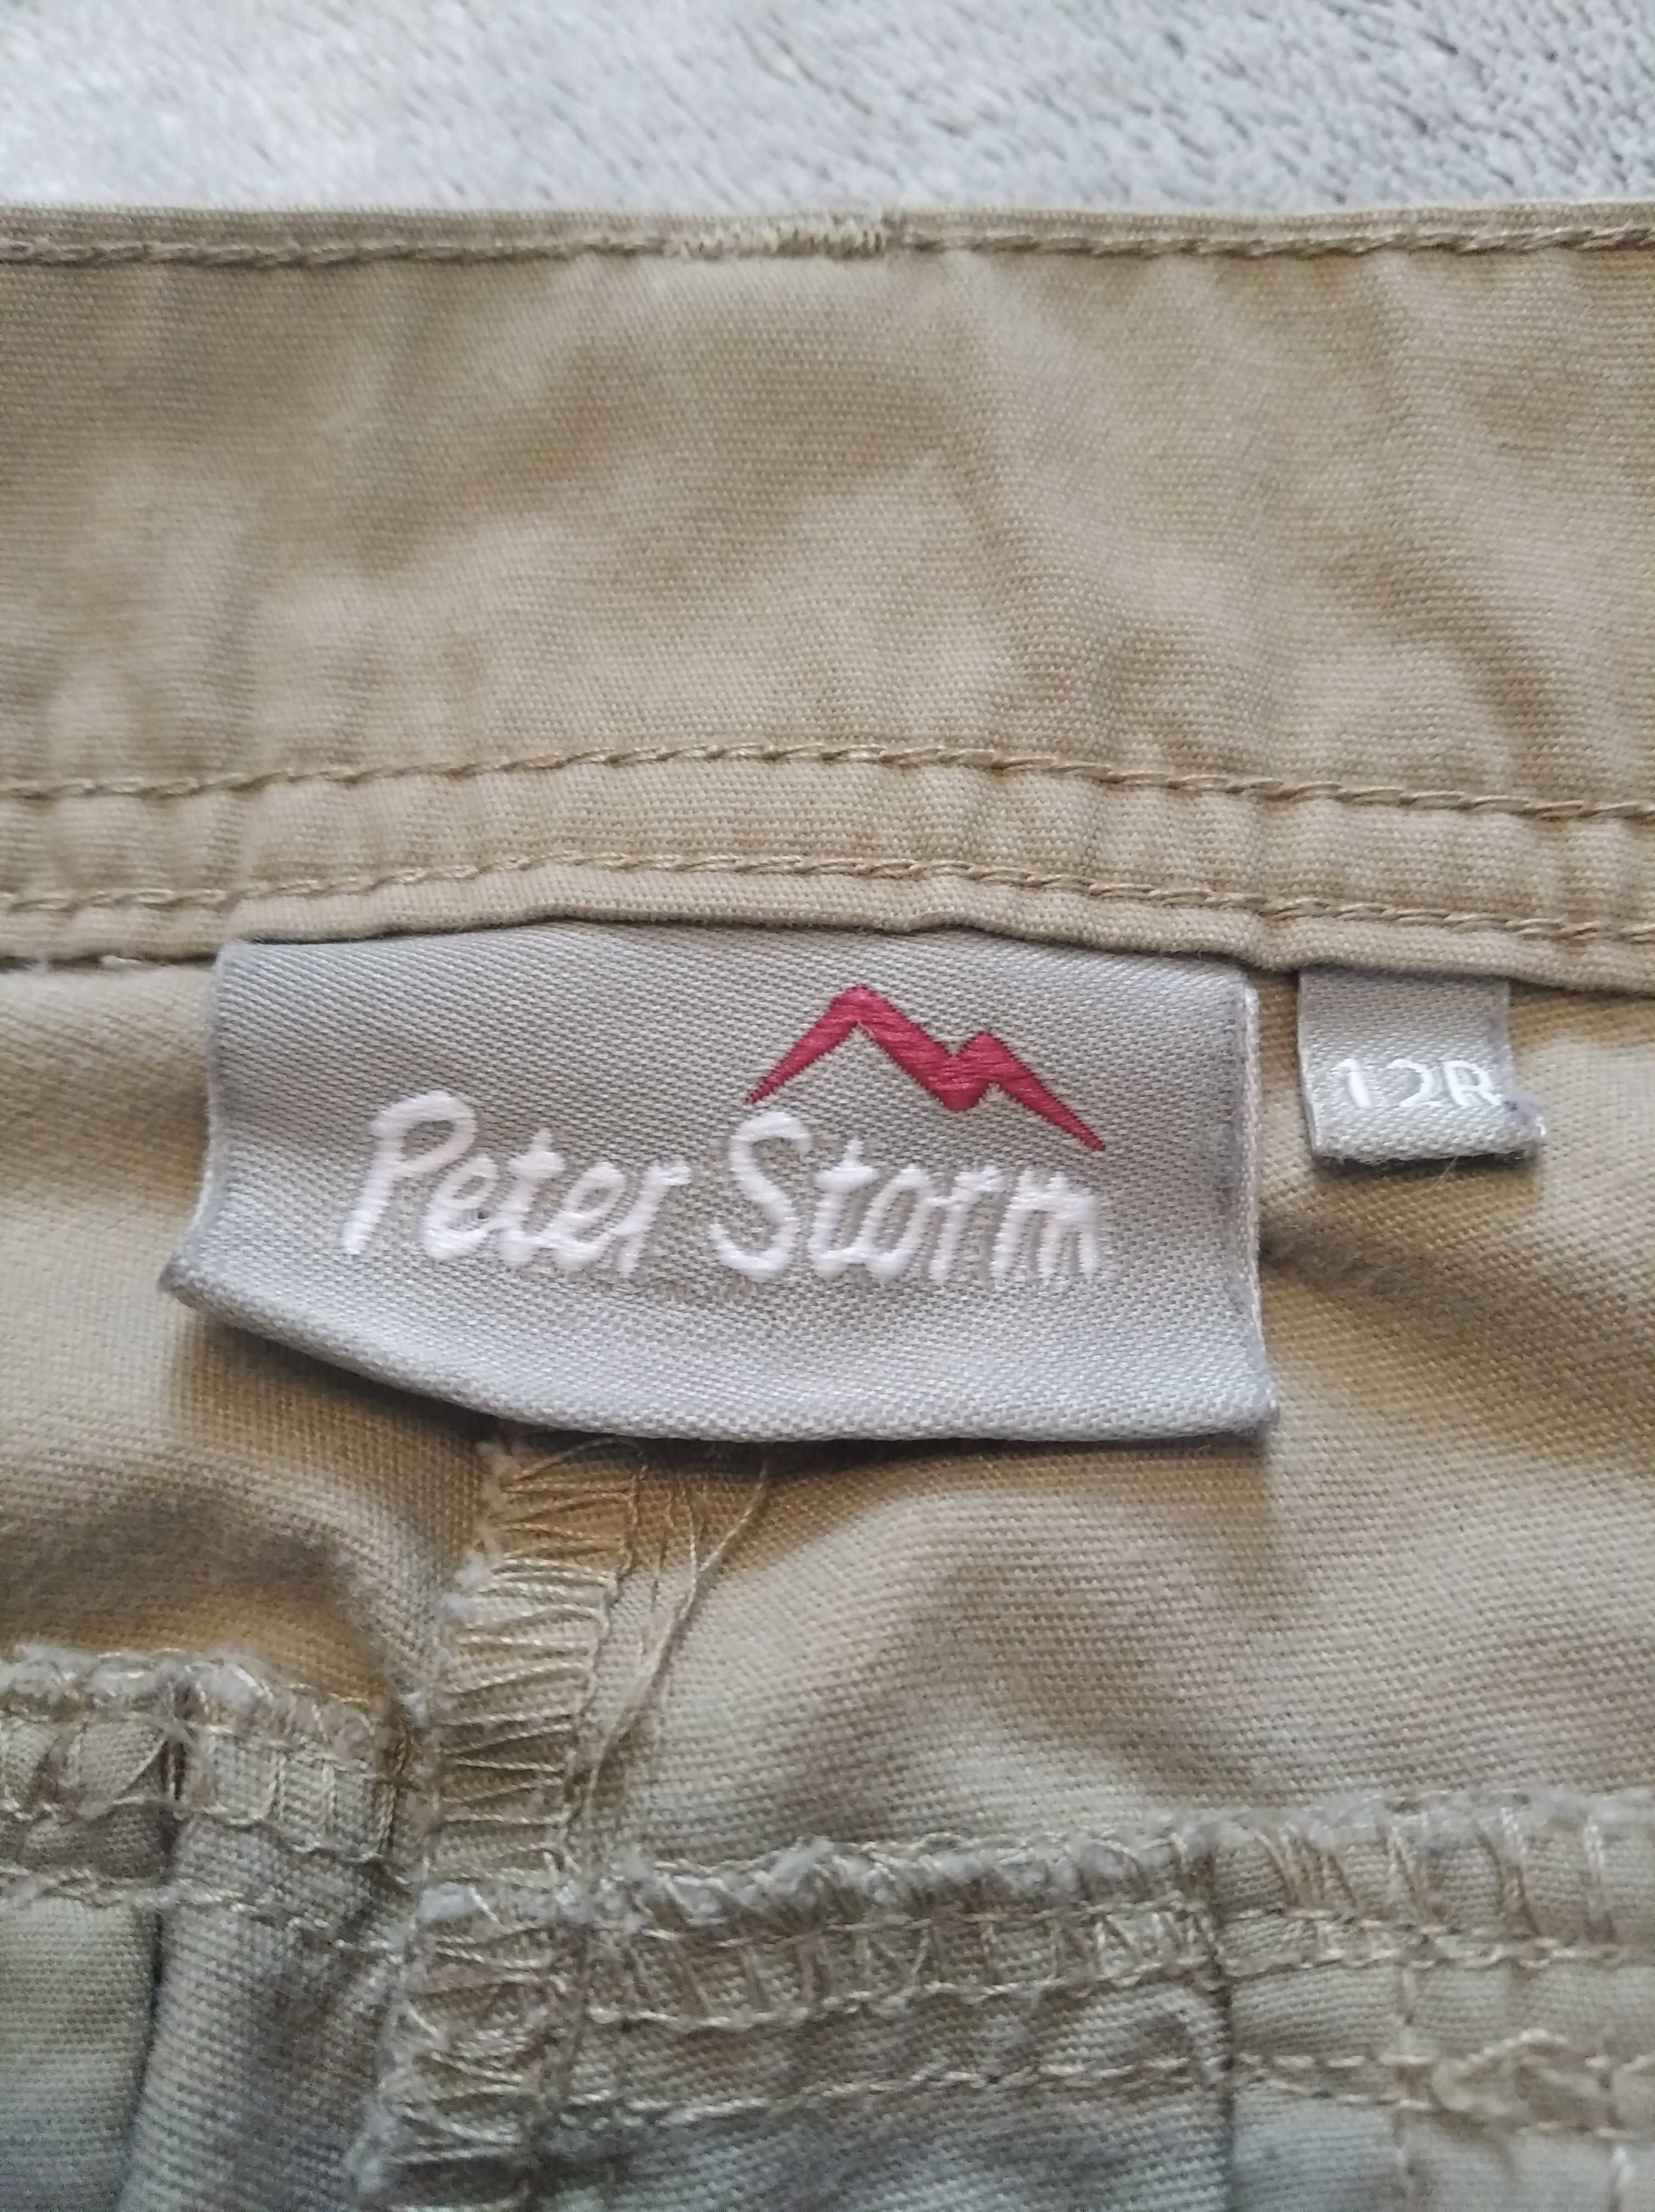 Spodnie trekkingowe Peter Storm roz. 12 R (L)